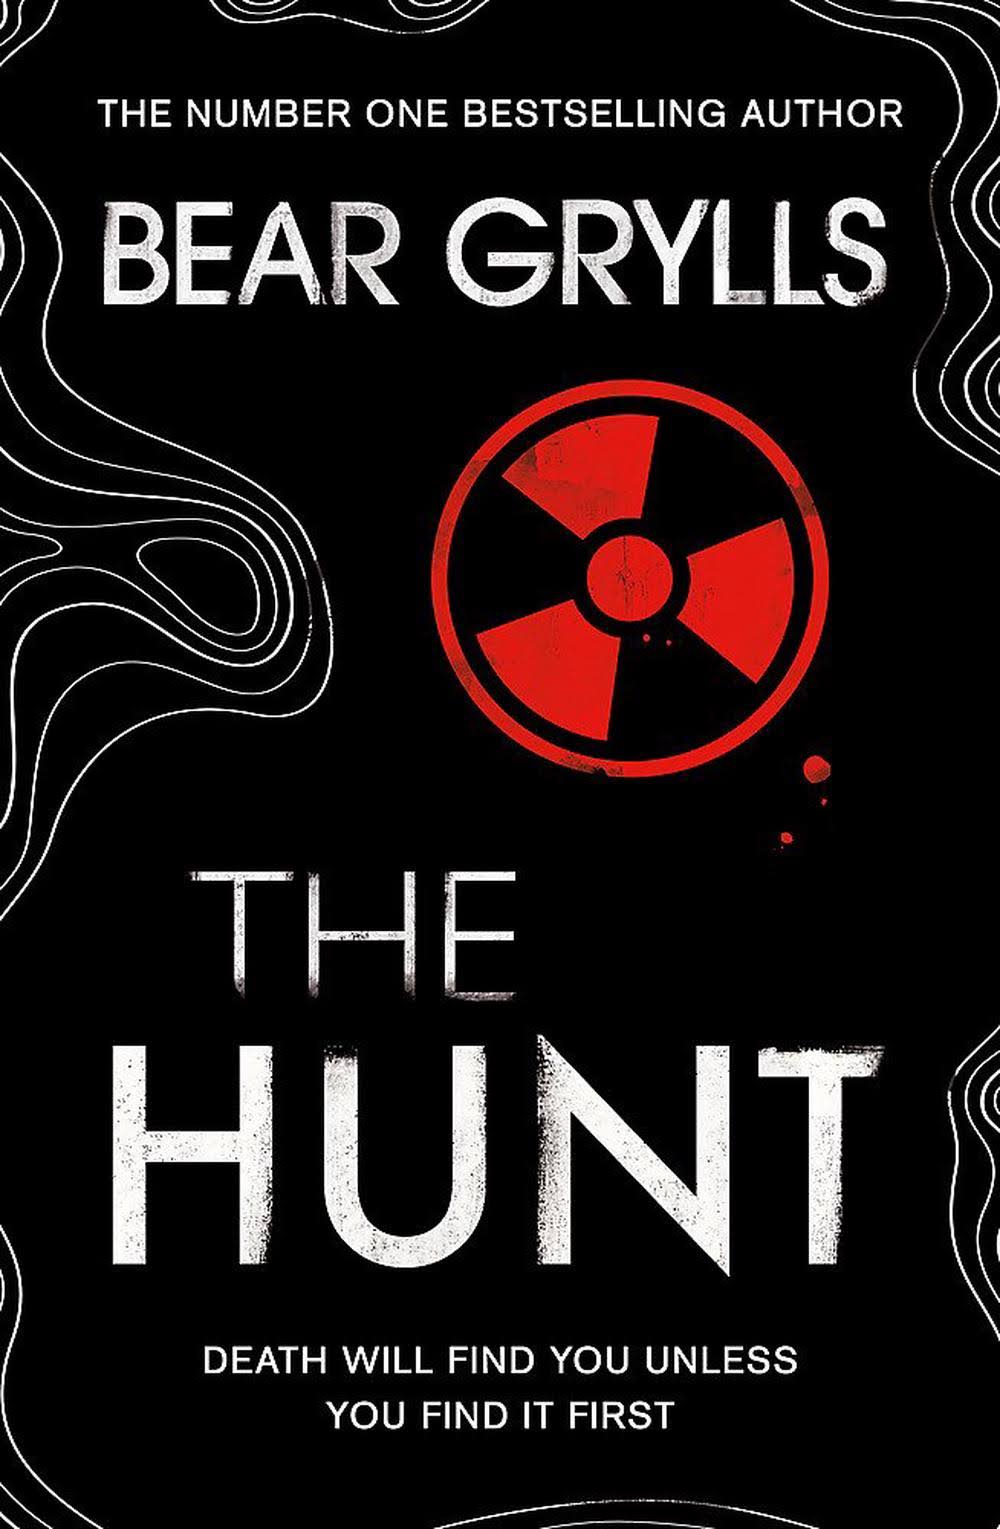 Bear Grylls: The Hunt by Bear Grylls